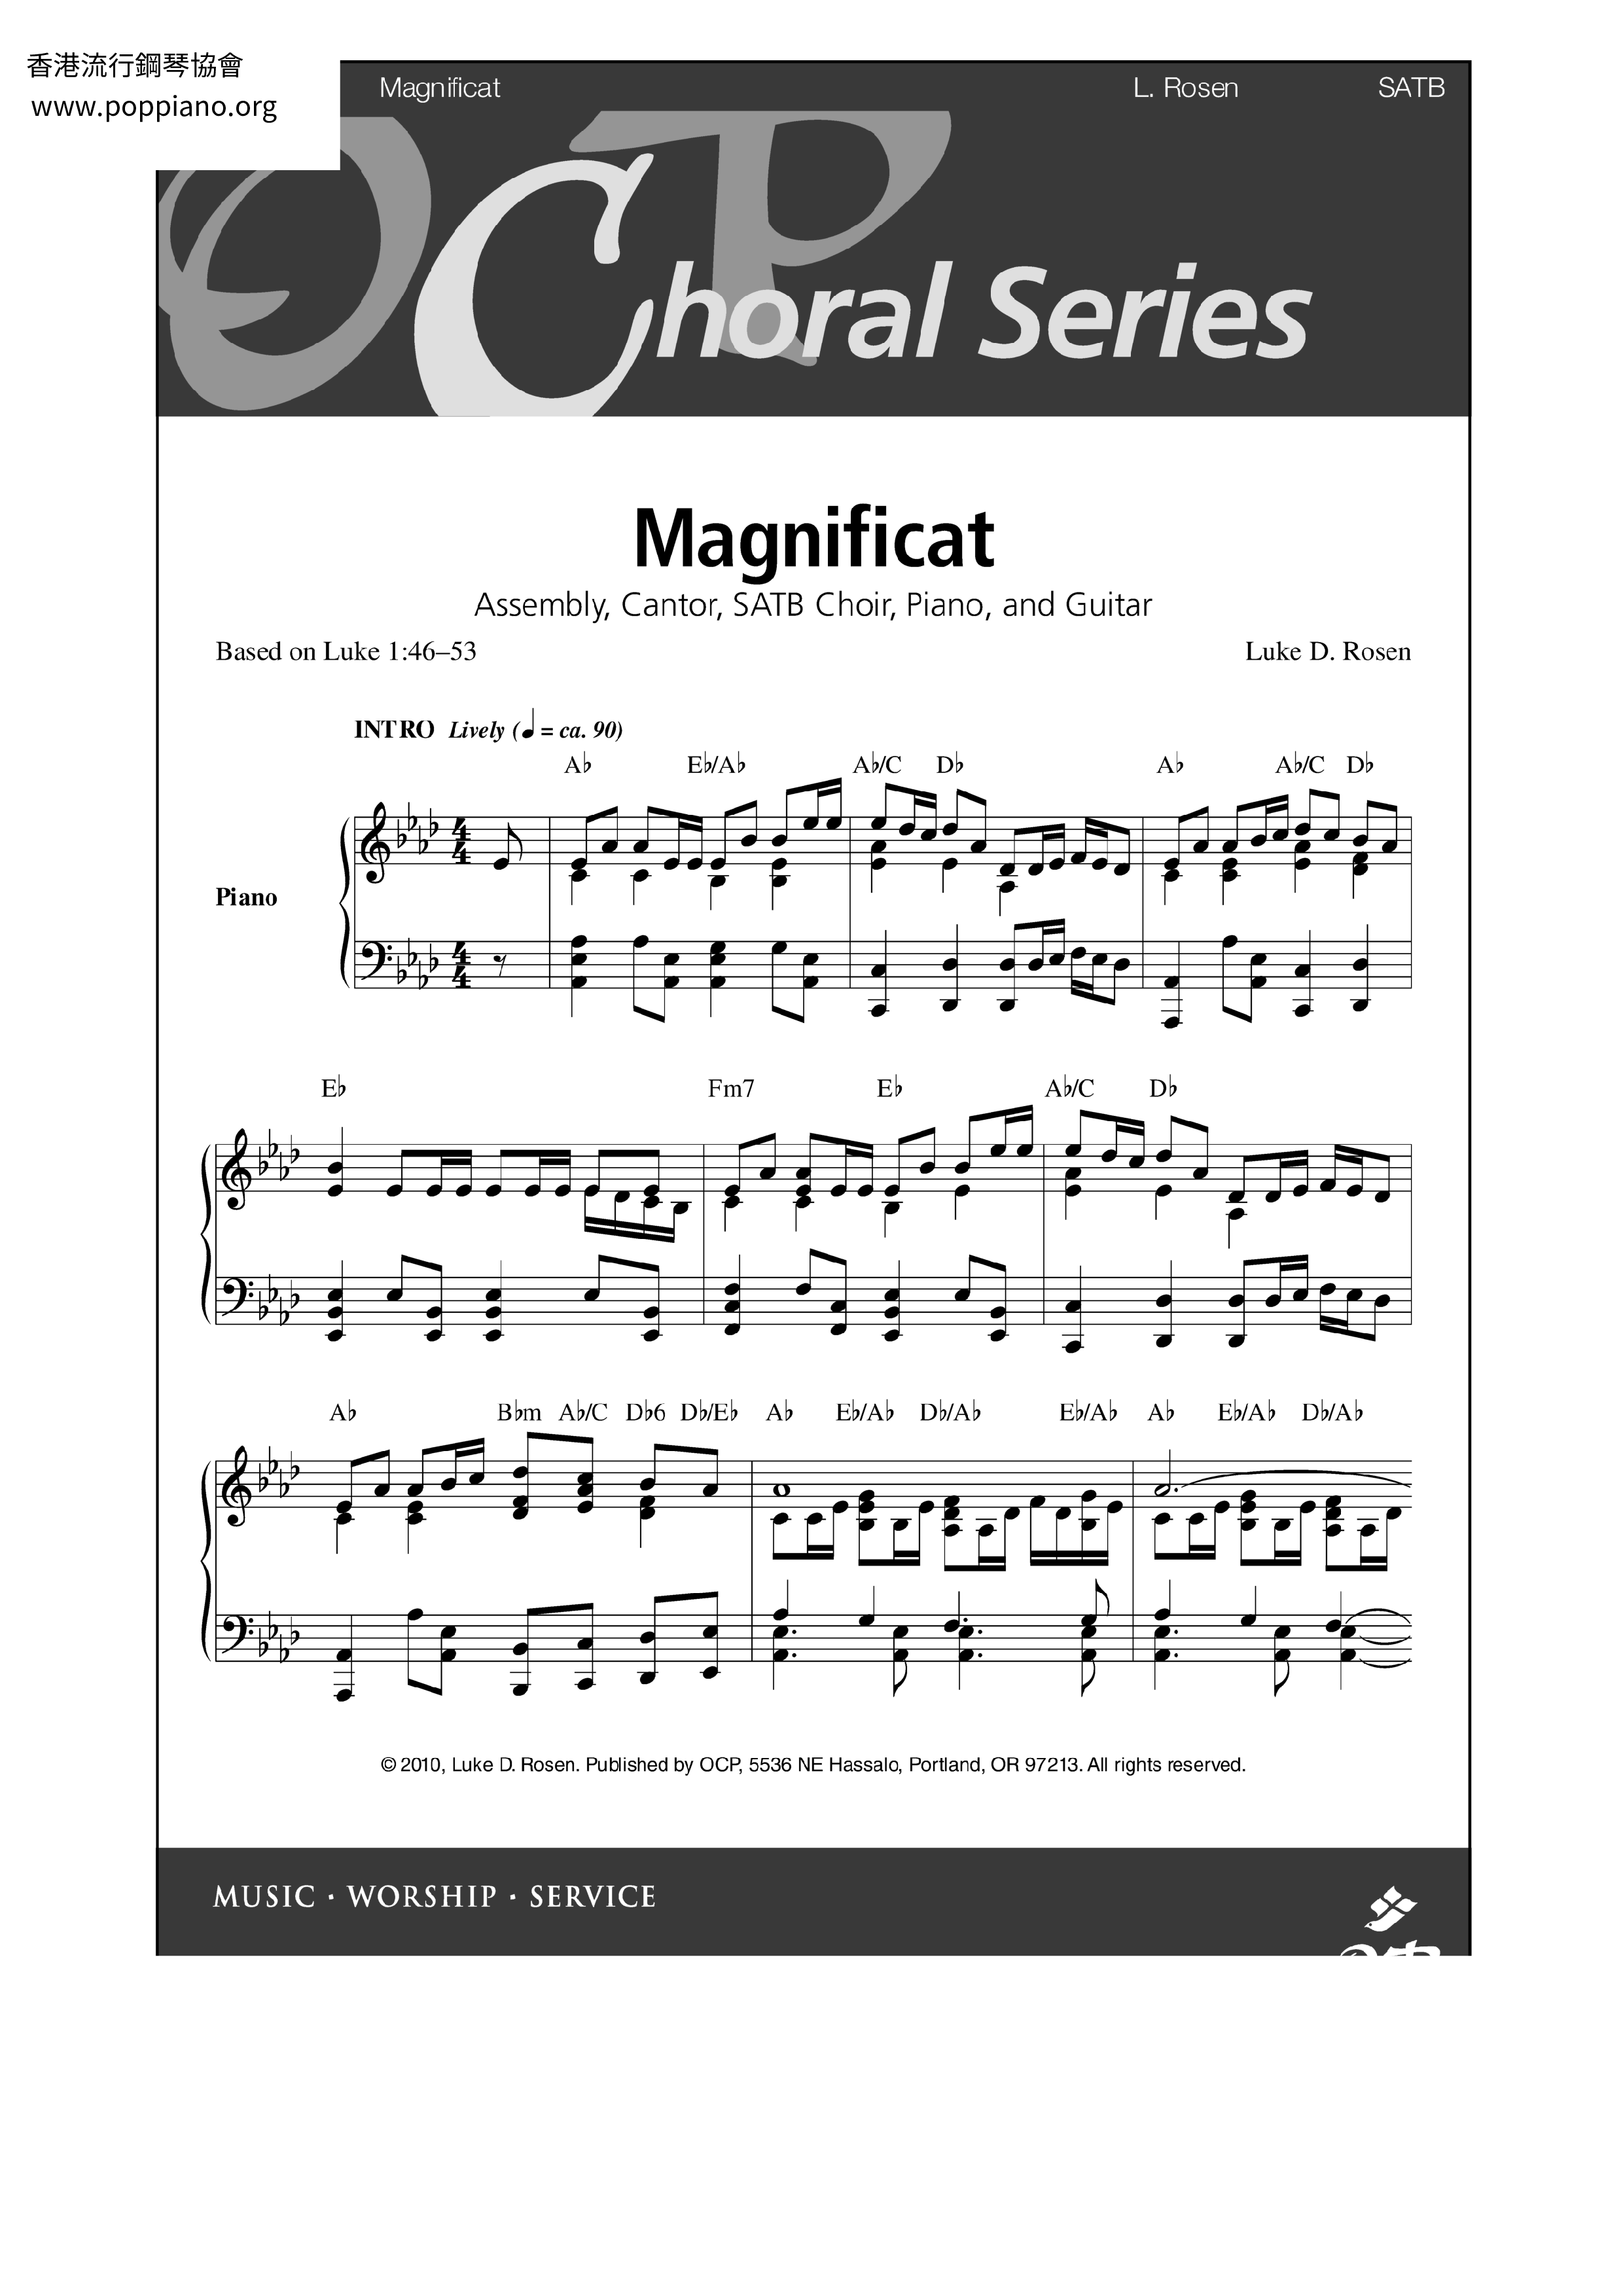 Magnificat Score